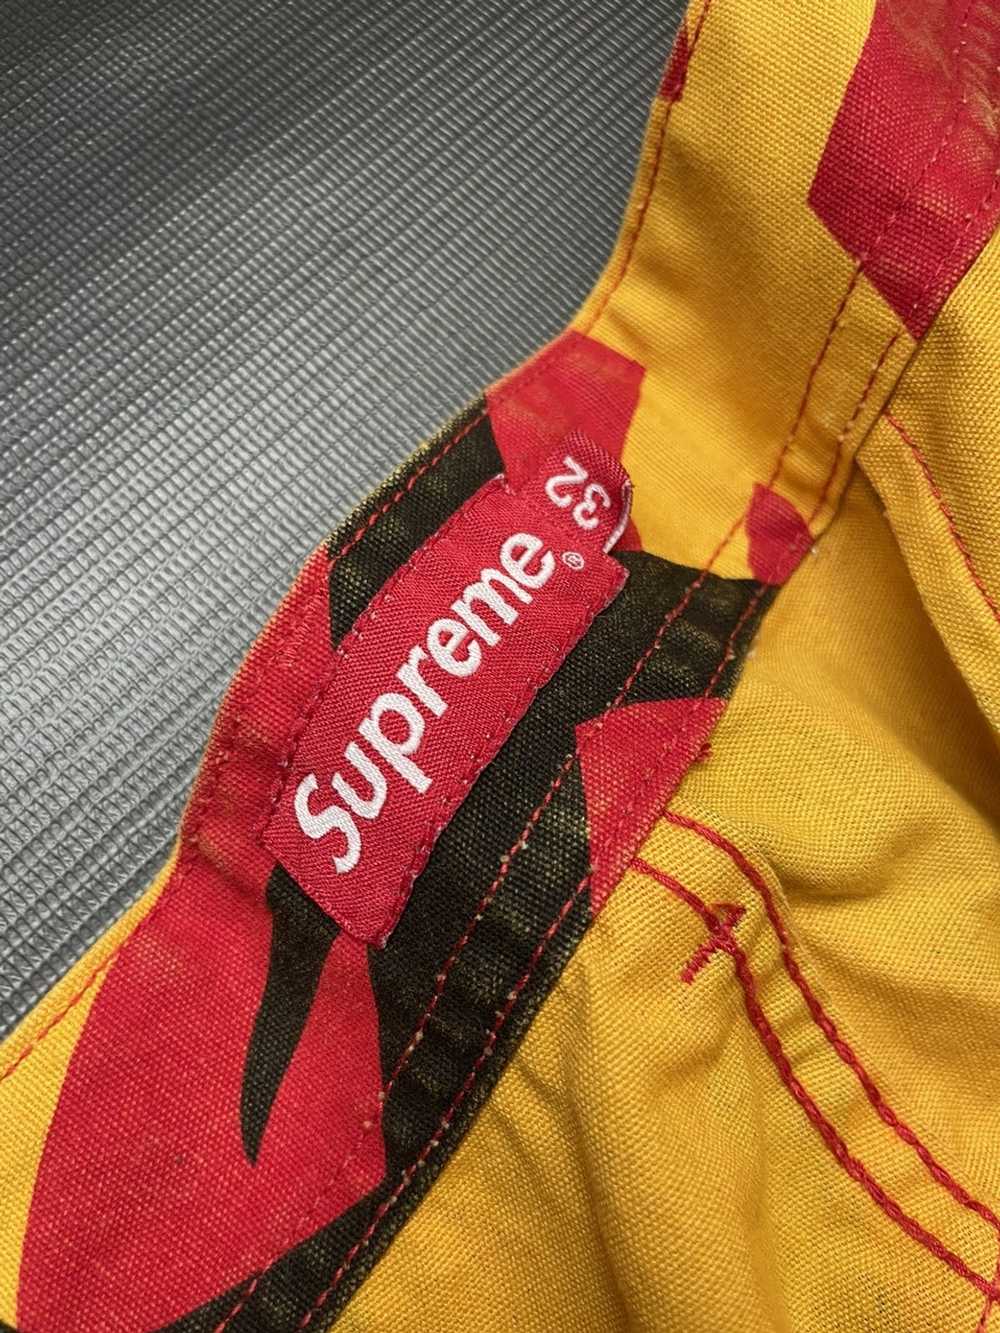 Supreme Supreme Pattern Pants Red Yellow Black - image 4